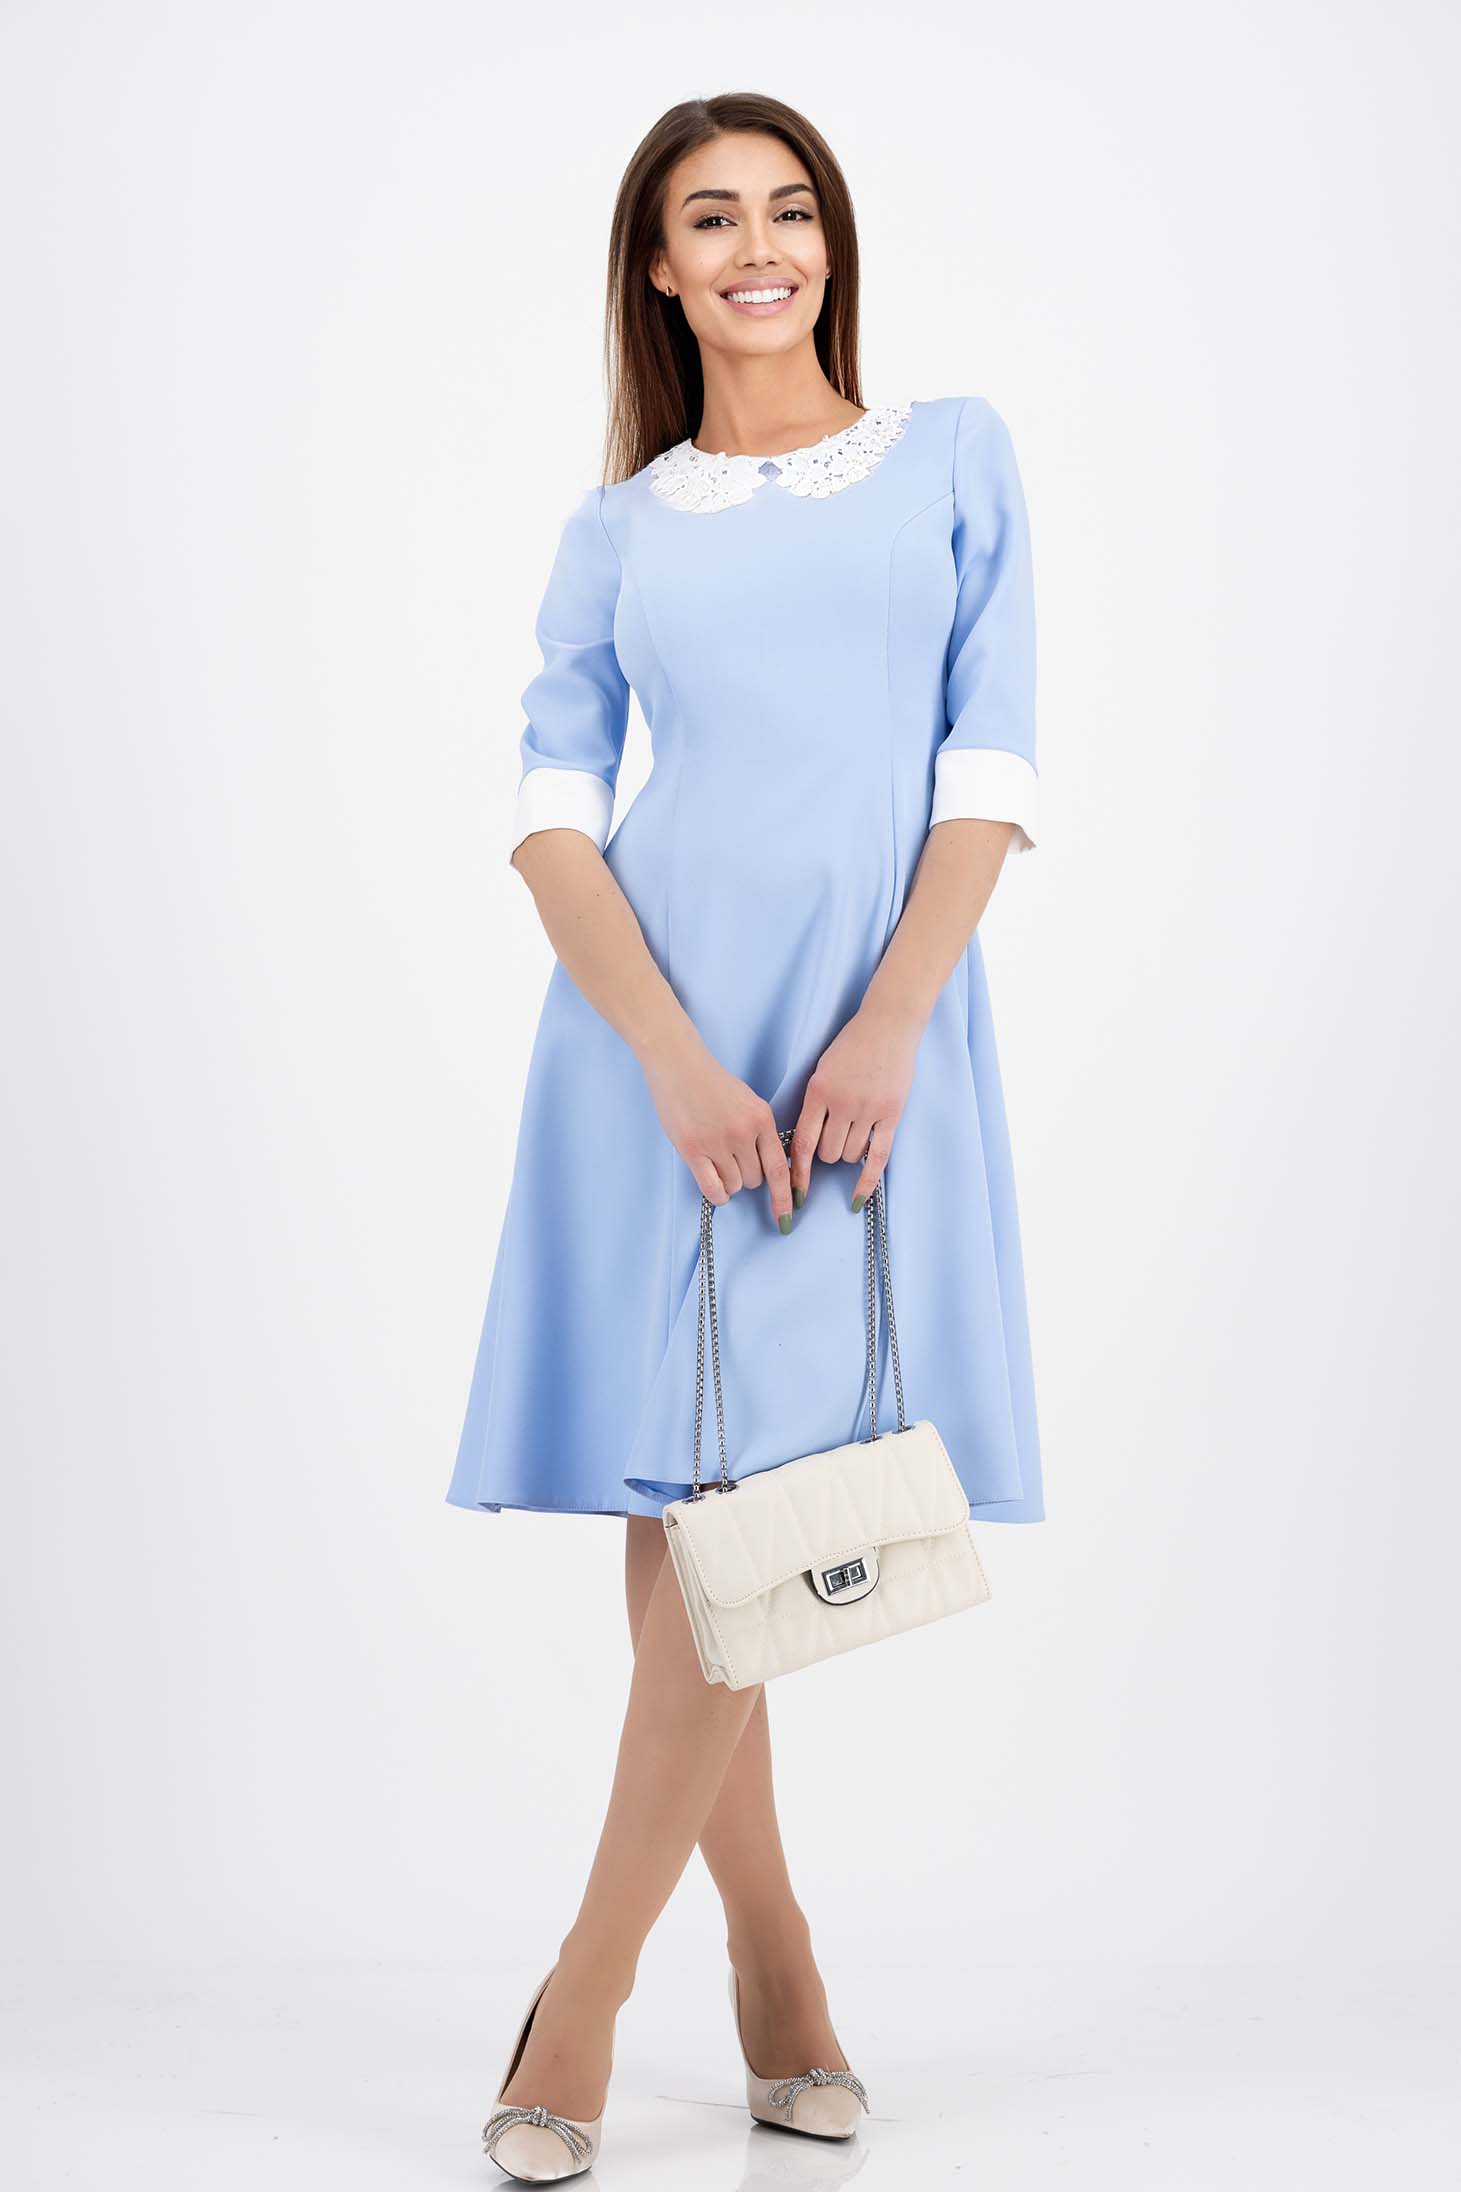 Rochie din stofa usor elastica albastru-deschis in clos cu guler decorativ - StarShinerS 3 - StarShinerS.ro